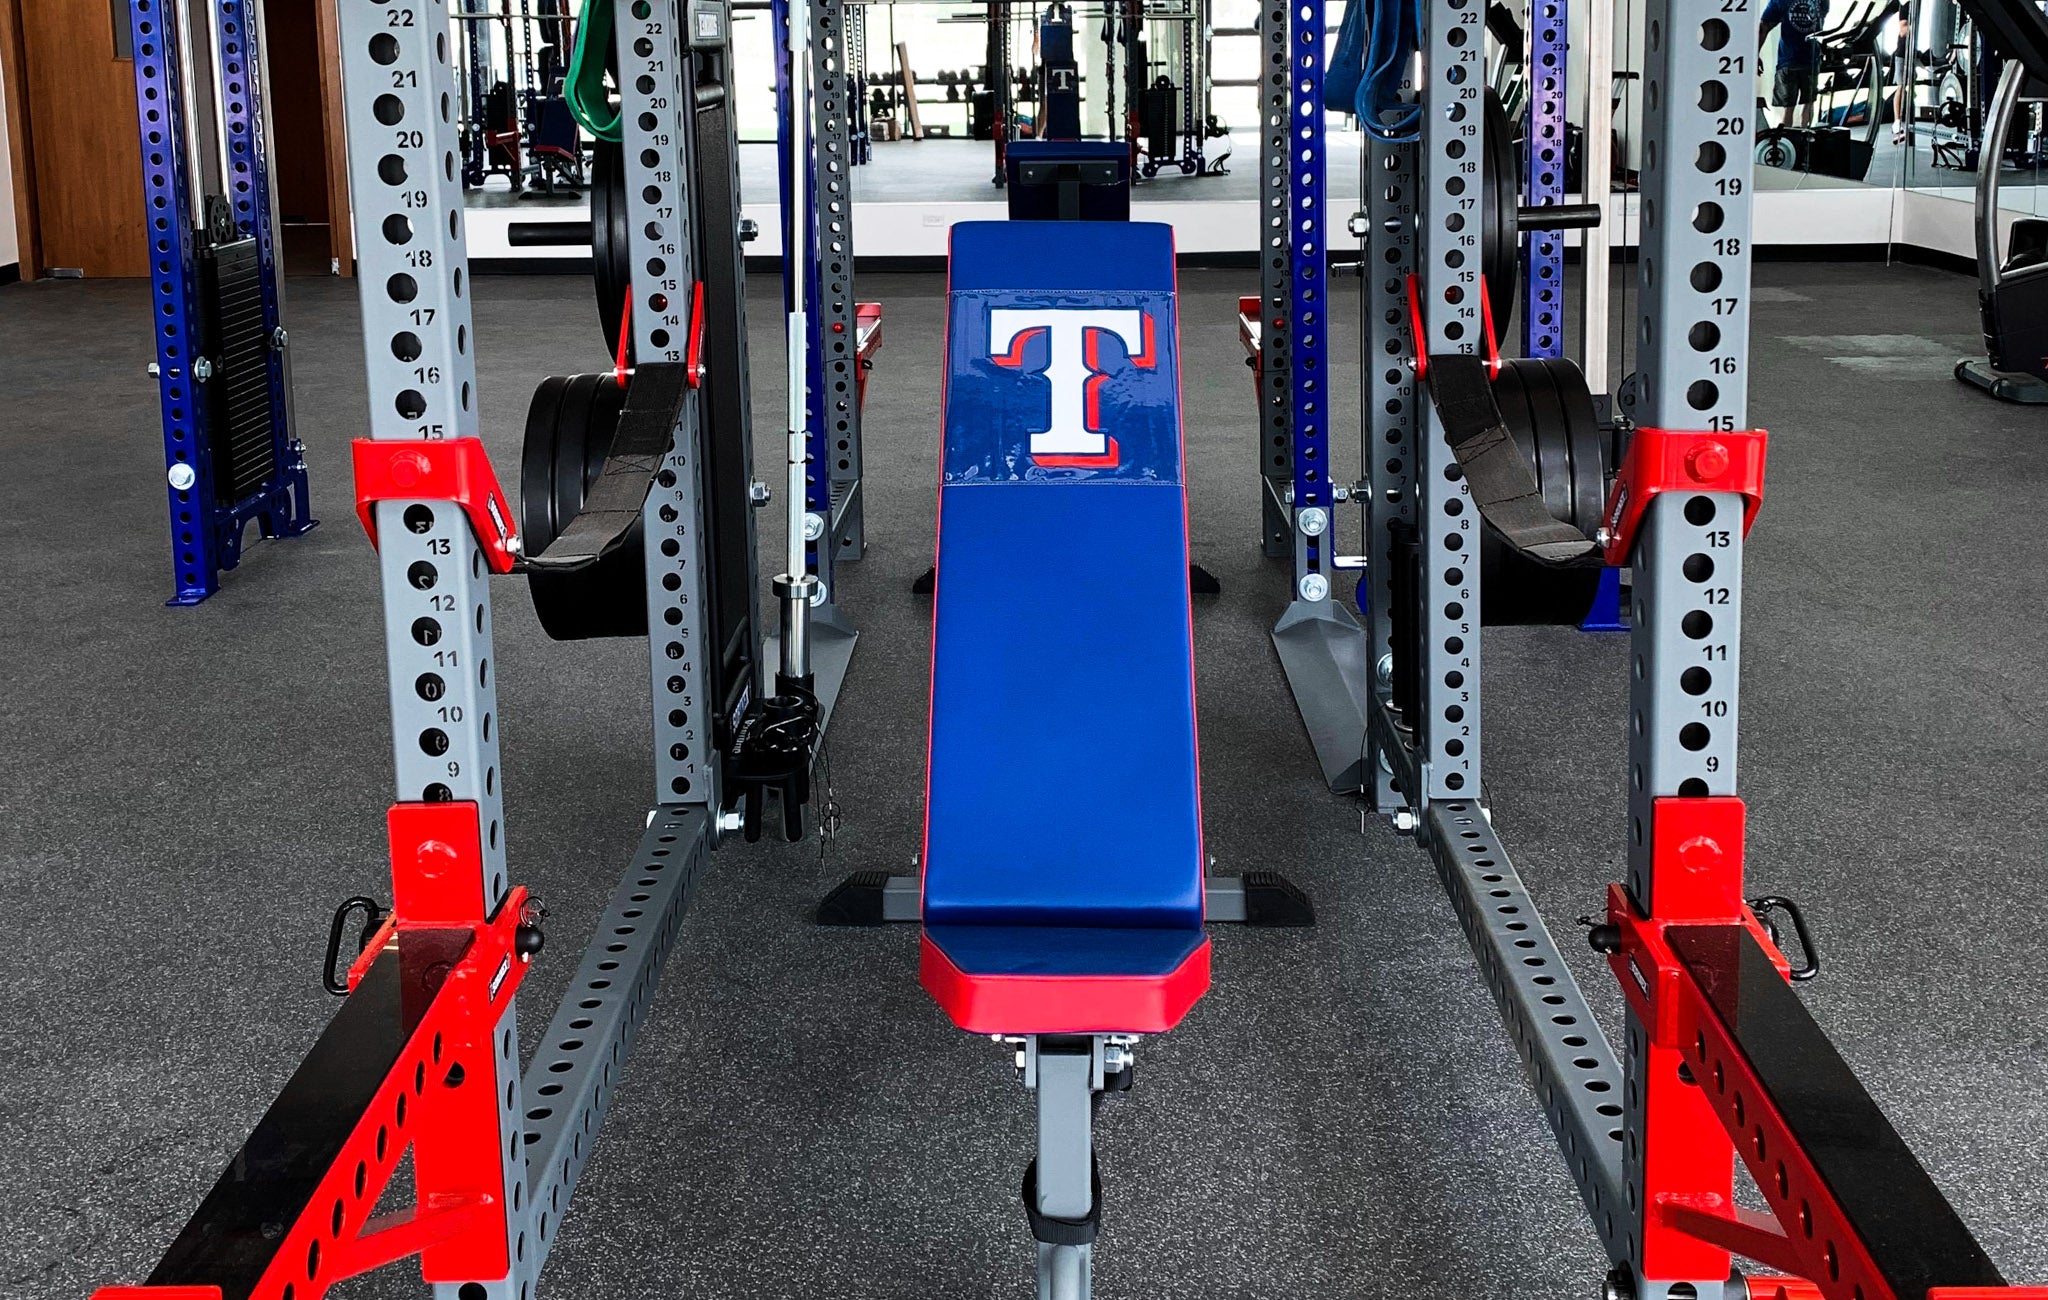 Professional baseball strength training facilities